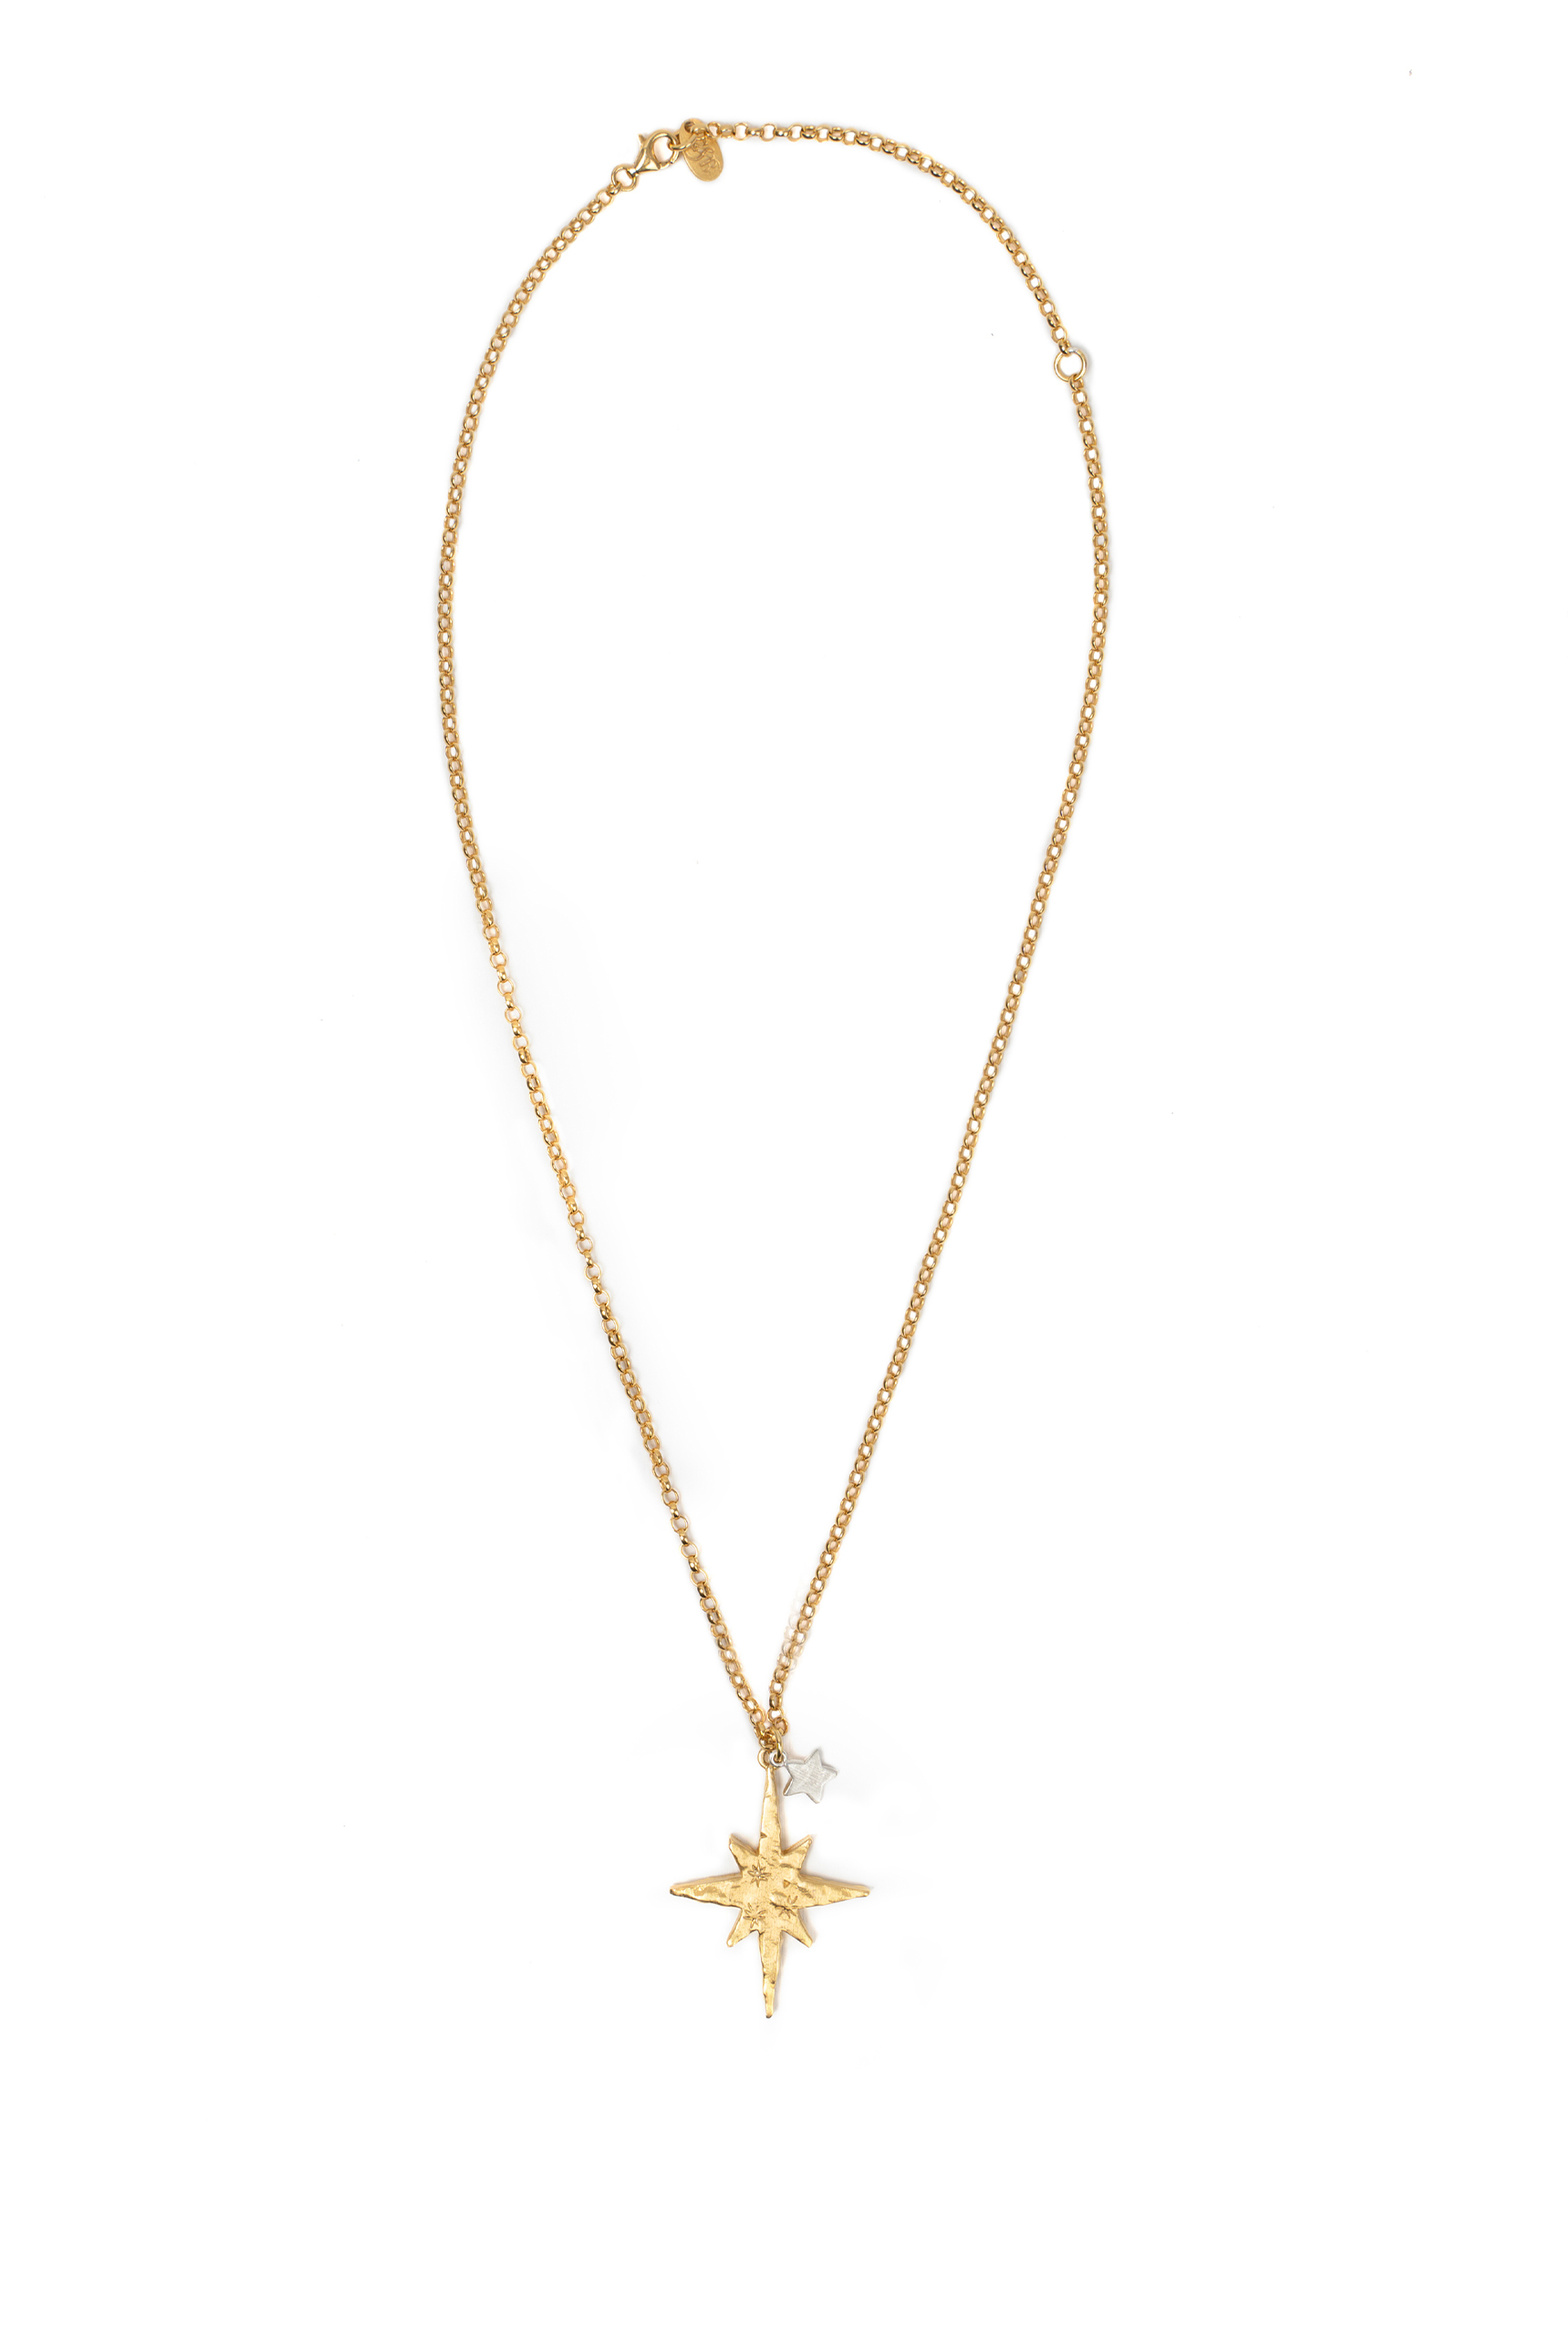 cb540_north-star-necklace_gold_c.jpg